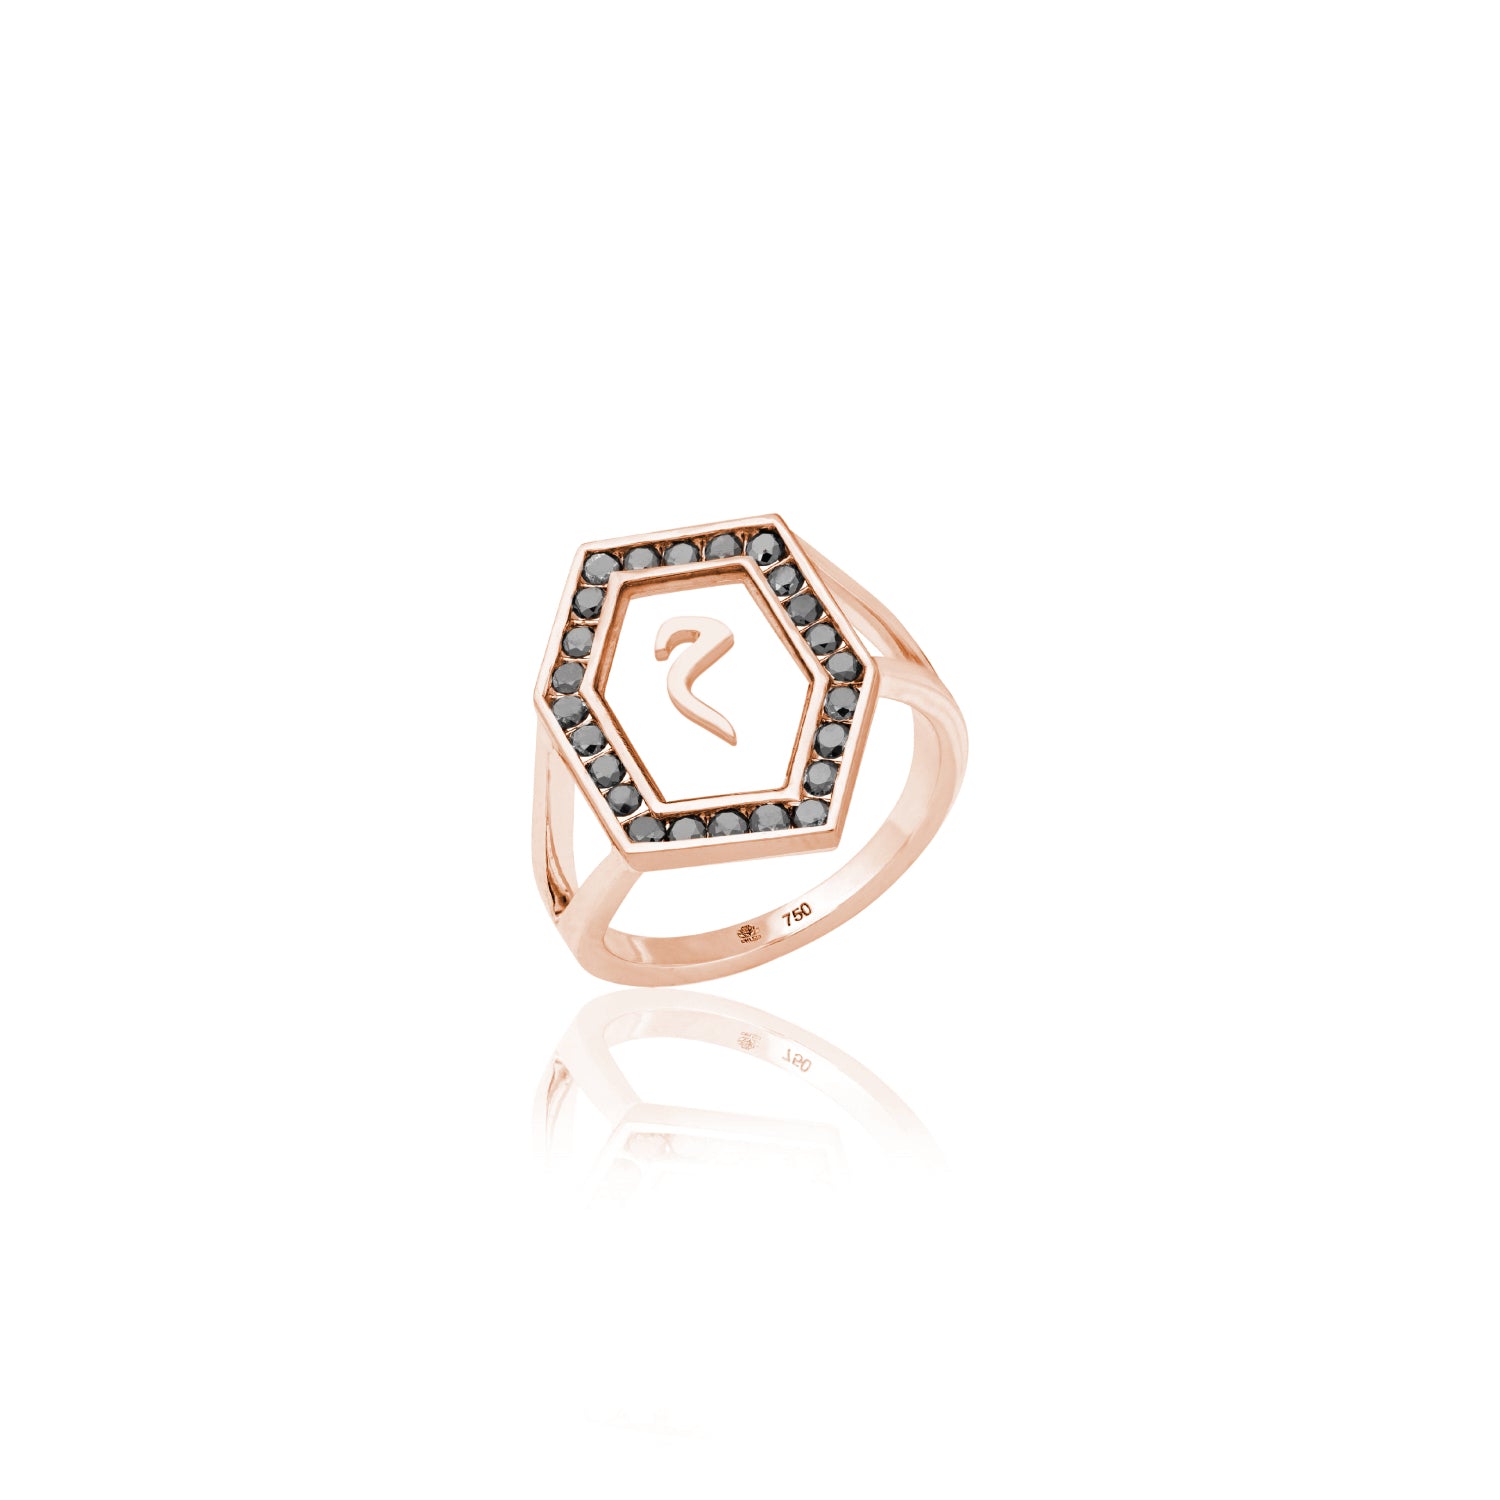 Qamoos 1.0 Letter م Black Diamond Ring in Rose Gold